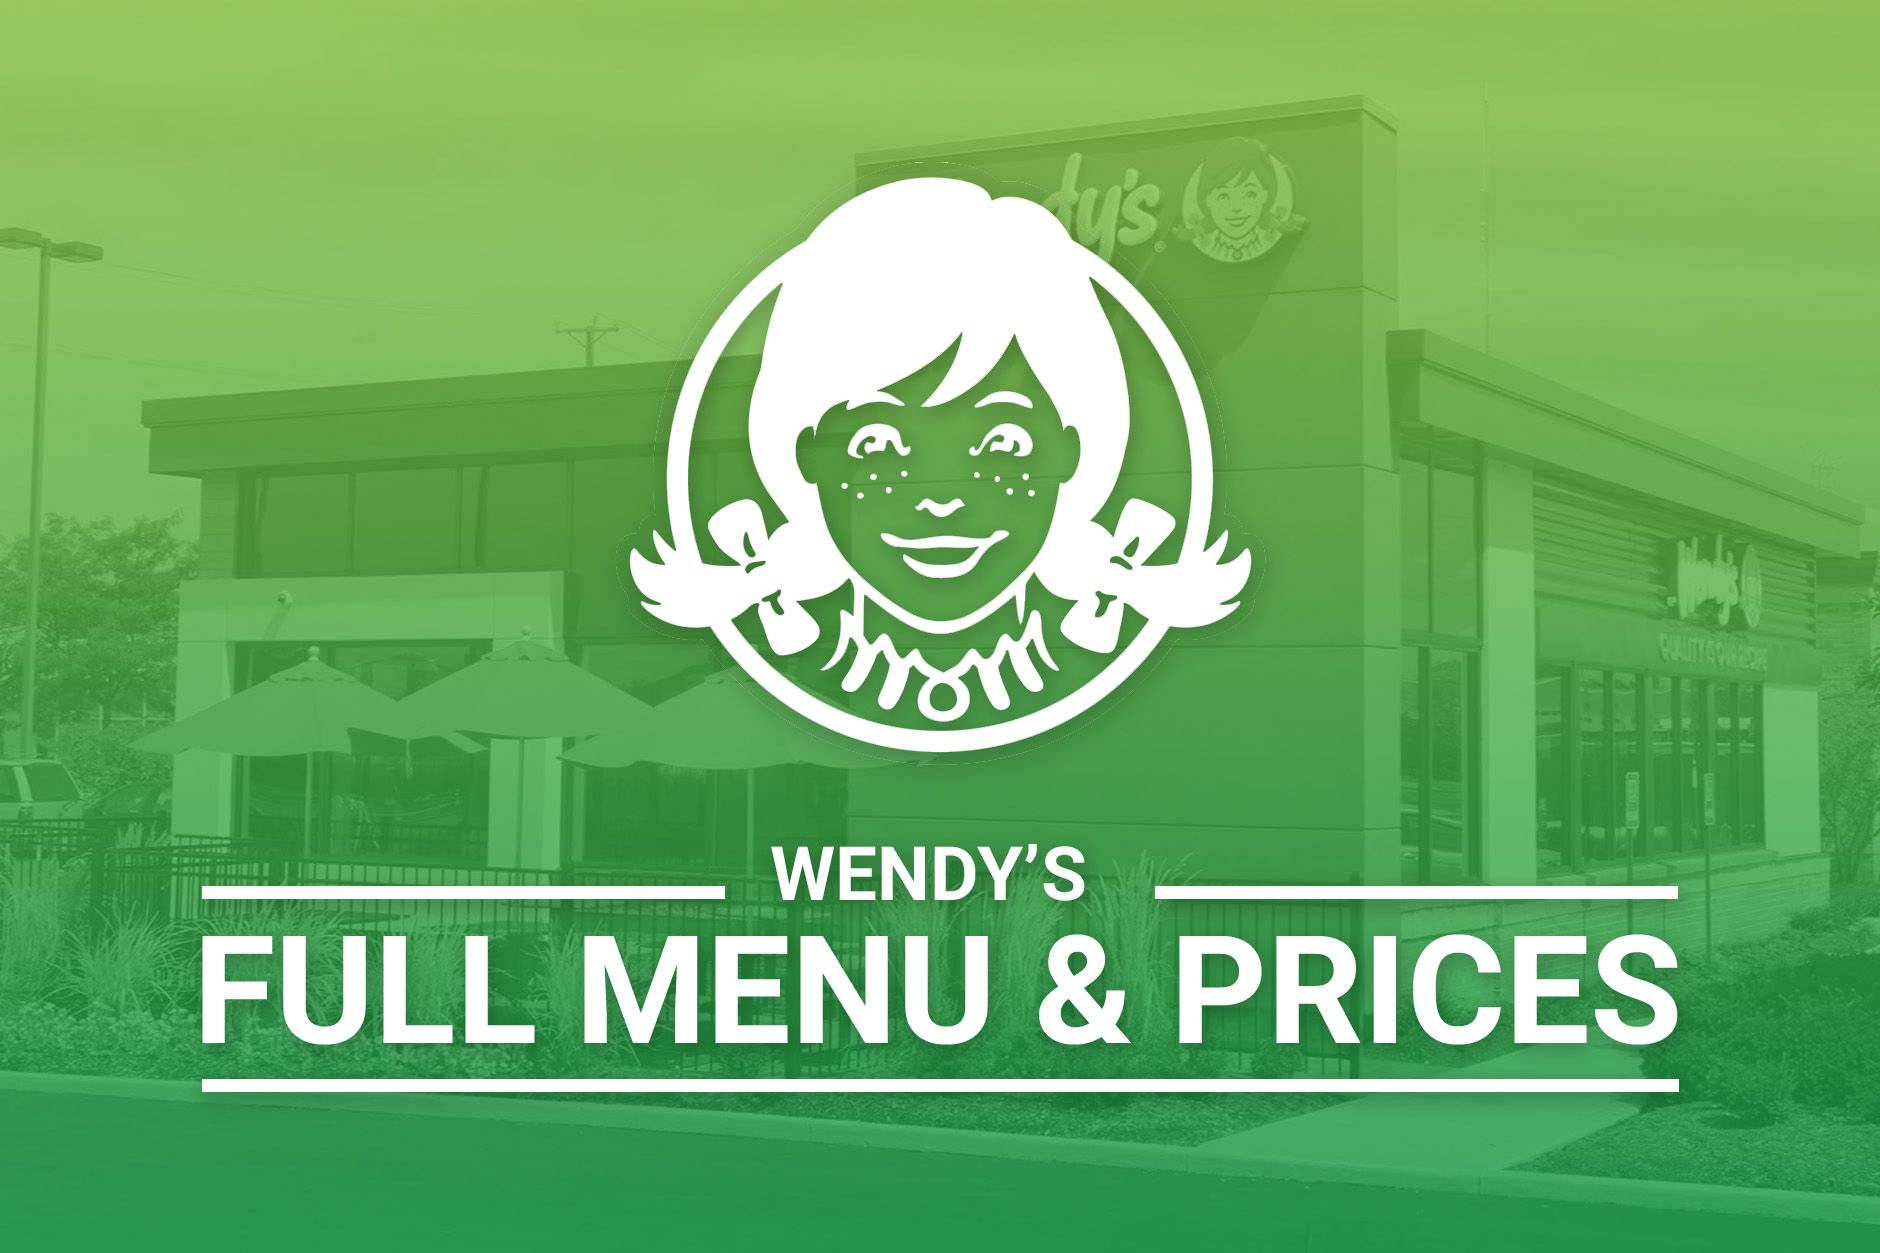 Wendys Full Menu & Prices